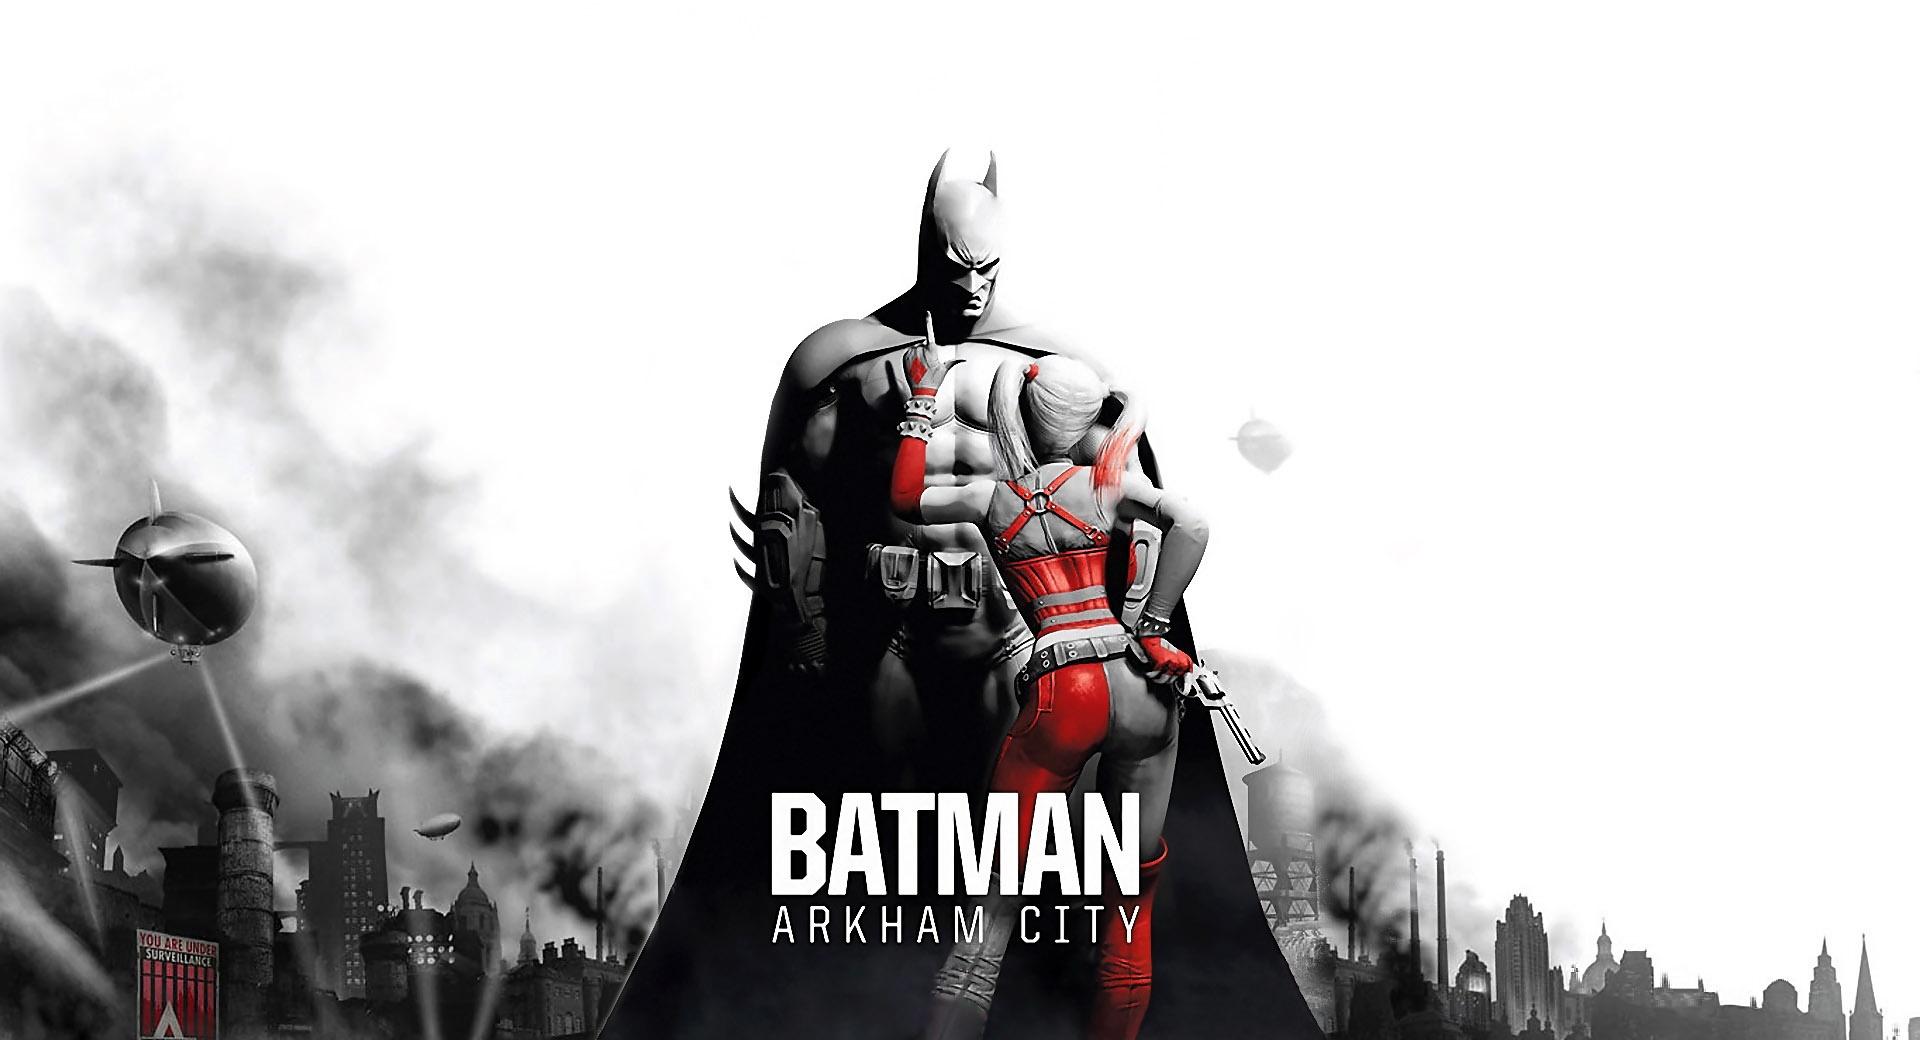 Batman Arkham City - Batman Harley at 1600 x 1200 size wallpapers HD quality